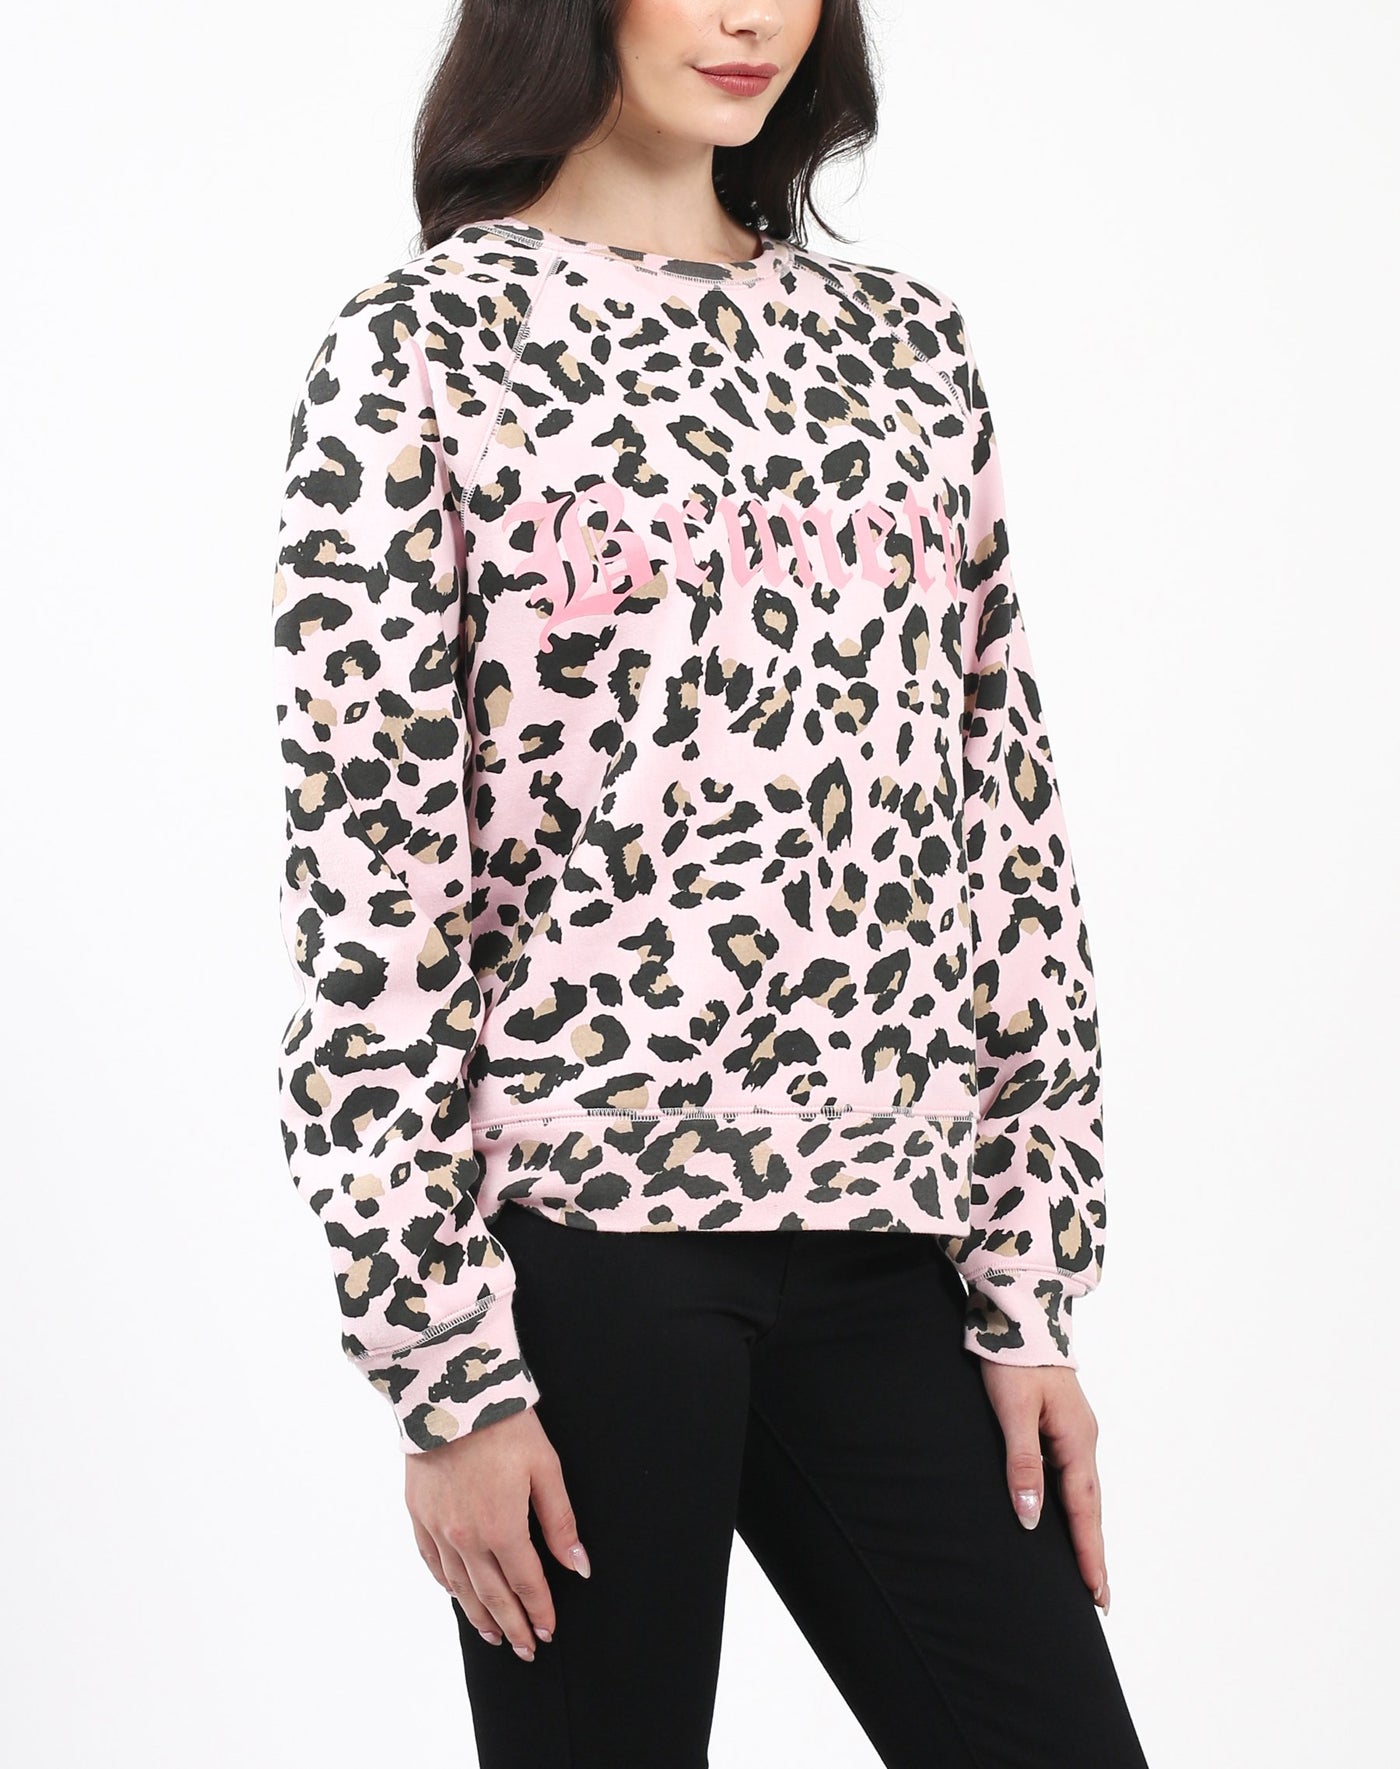 The "BRUNETTE" Pink Leopard Middle Sister Crew Neck Sweatshirt